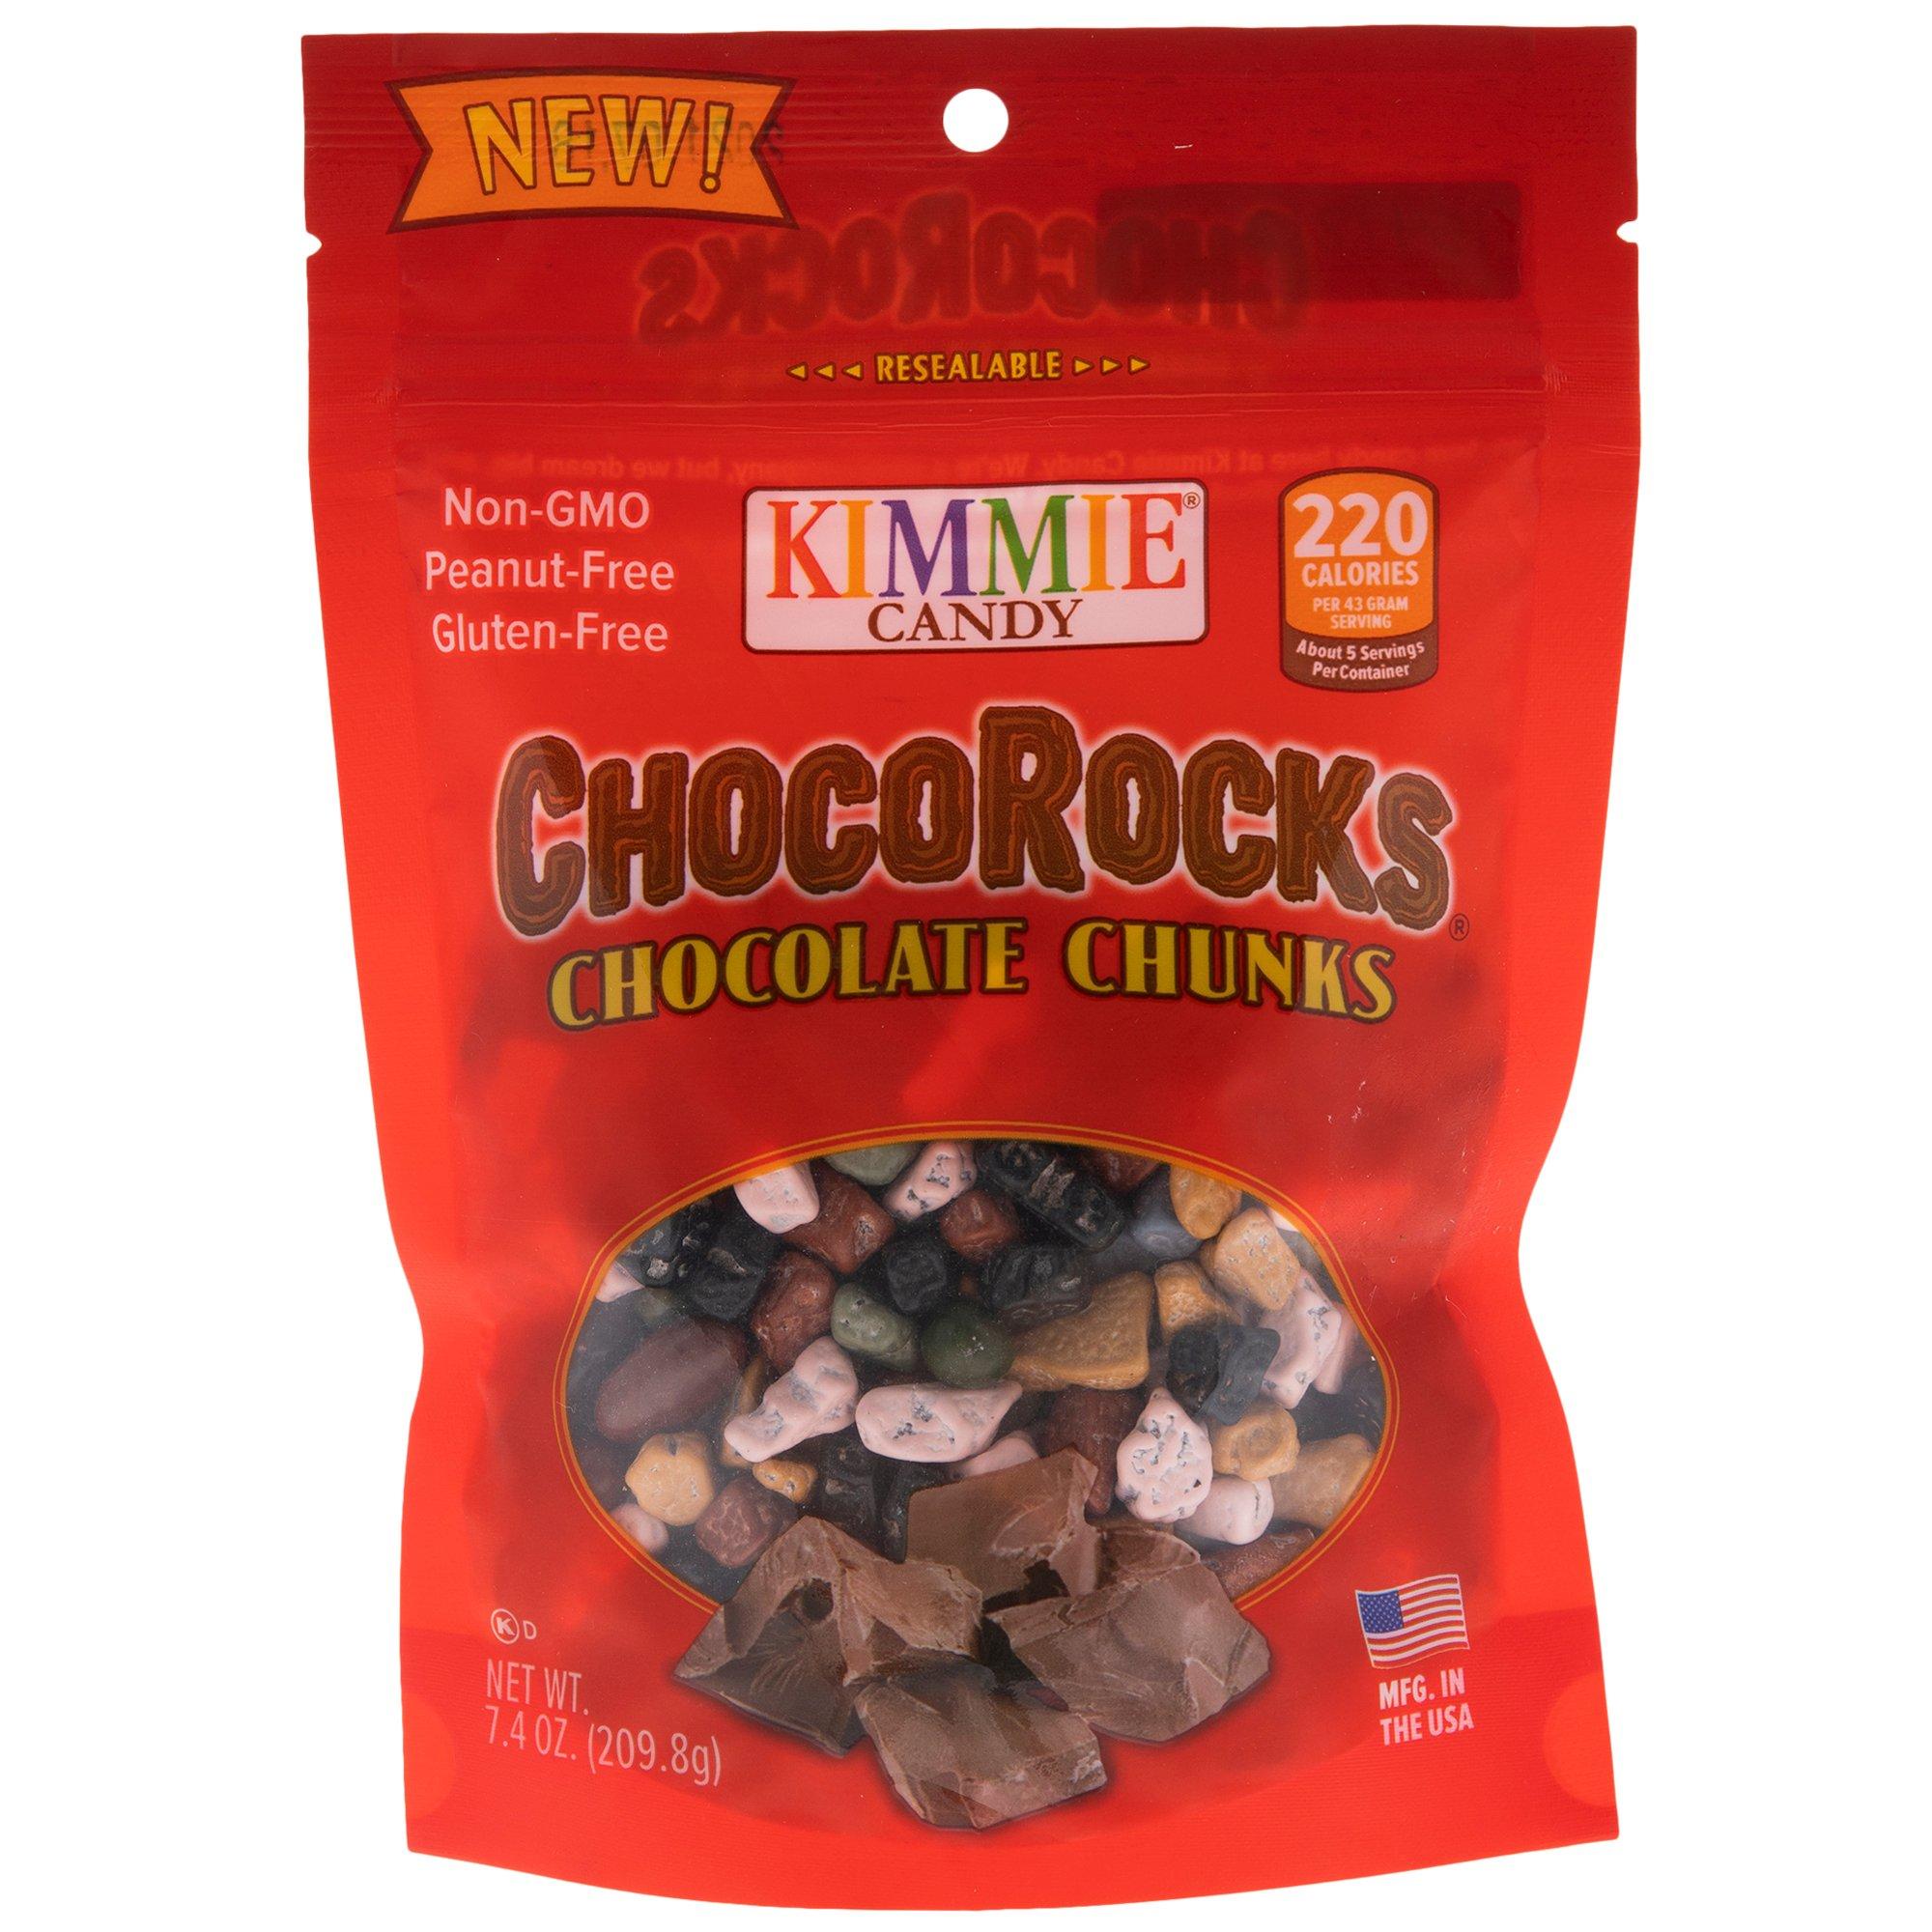 Choco Rocks, Hobby Lobby